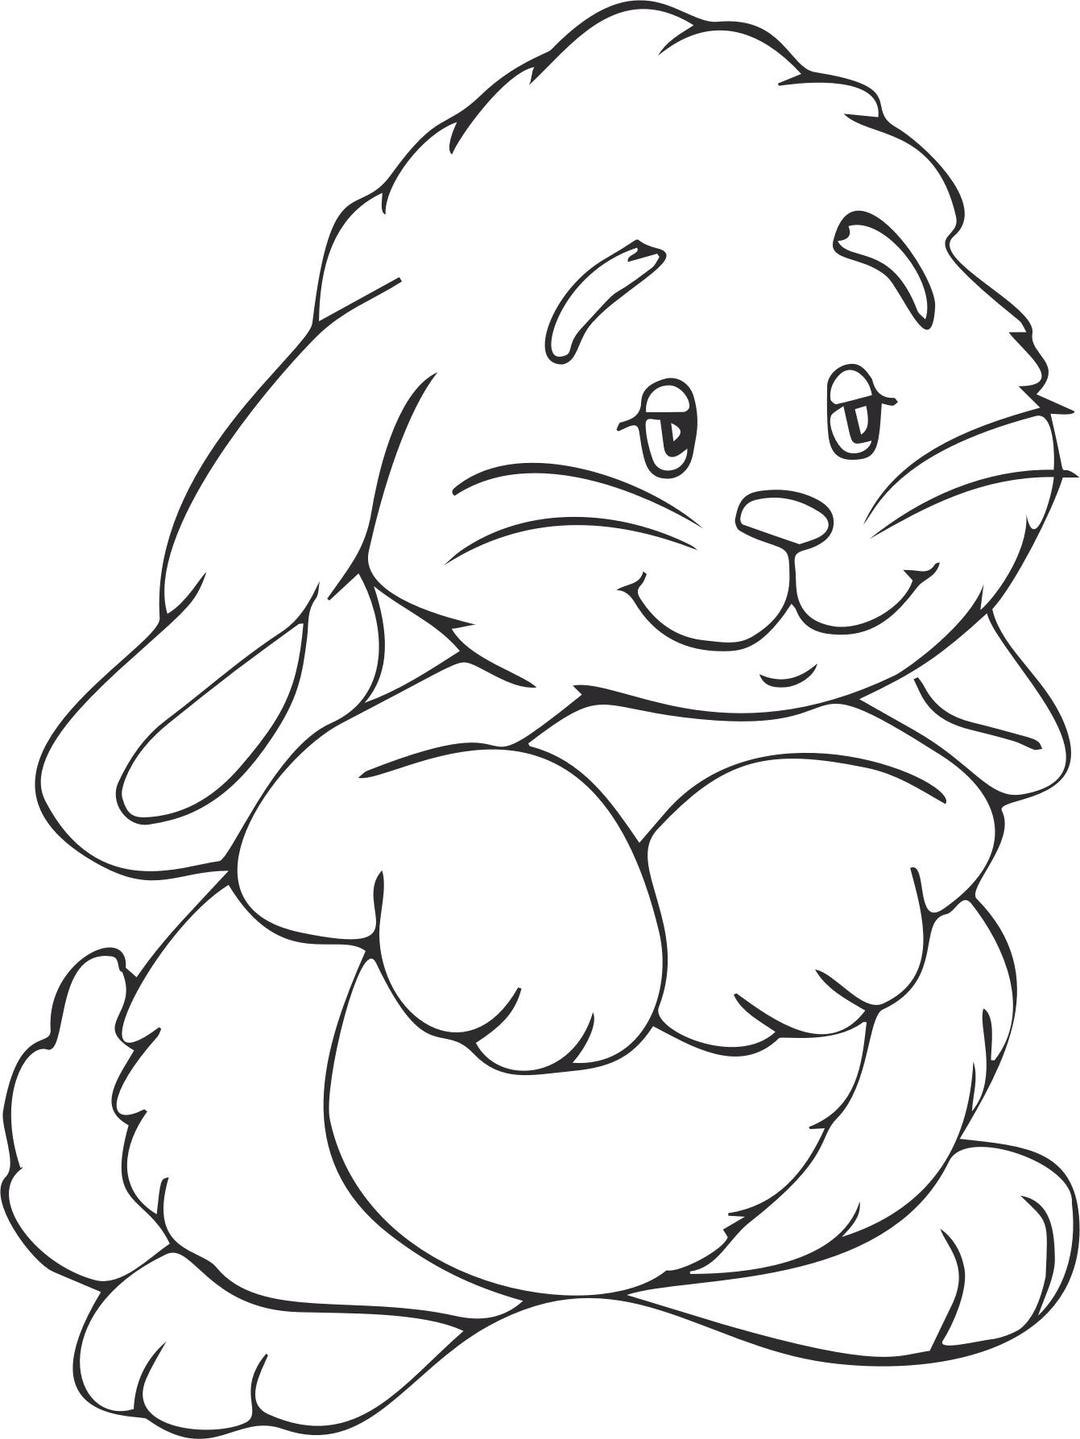 bunny - outline png transparent